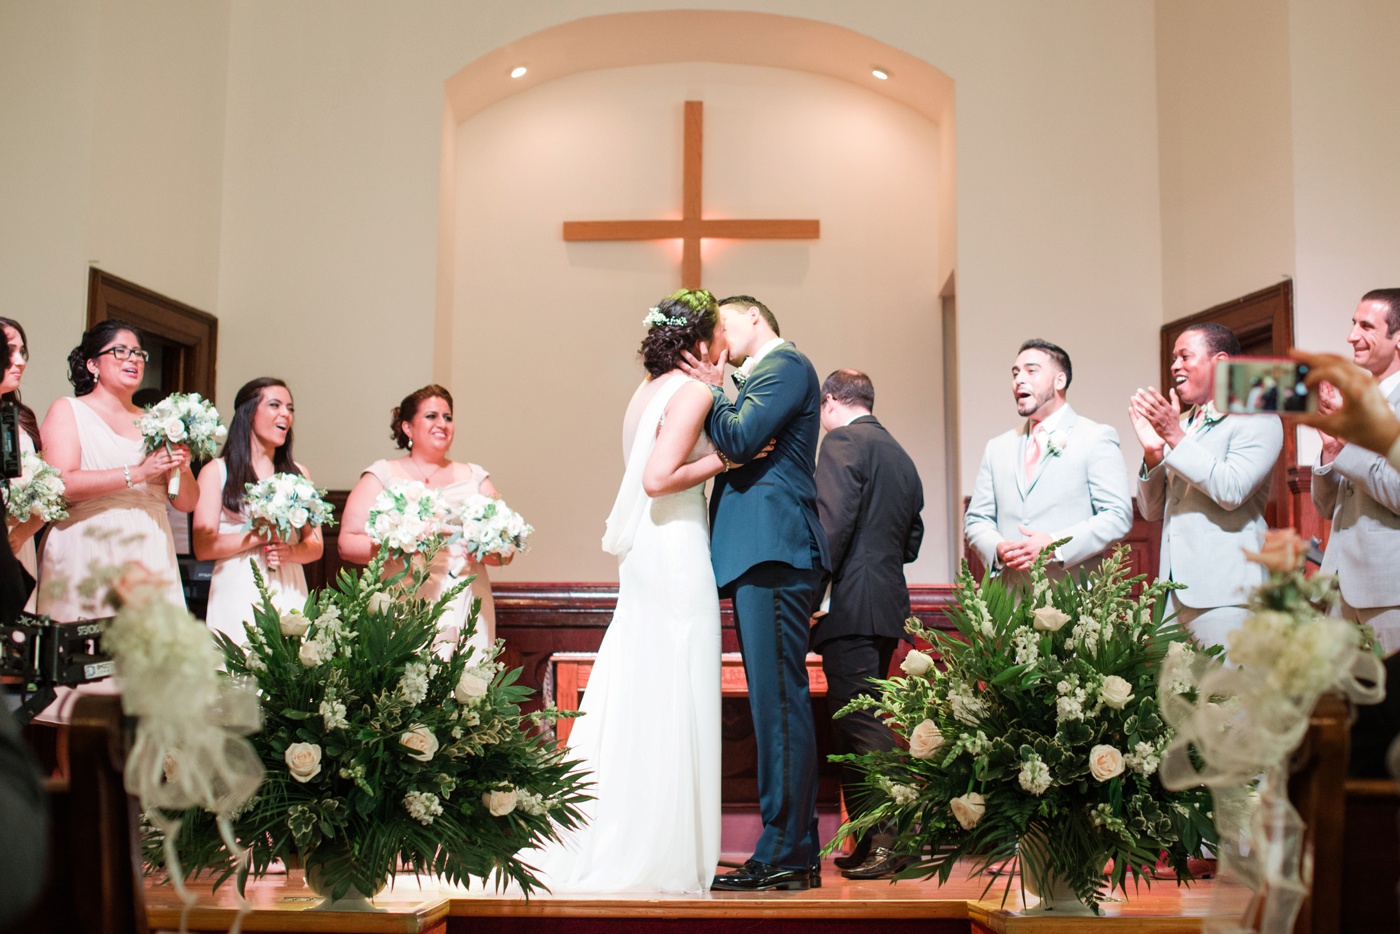 41 - Daniela + Franco - Celebrate at Snug Harbor Wedding - Staten Island New York Wedding Photographer - Alison Dunn Photography photo